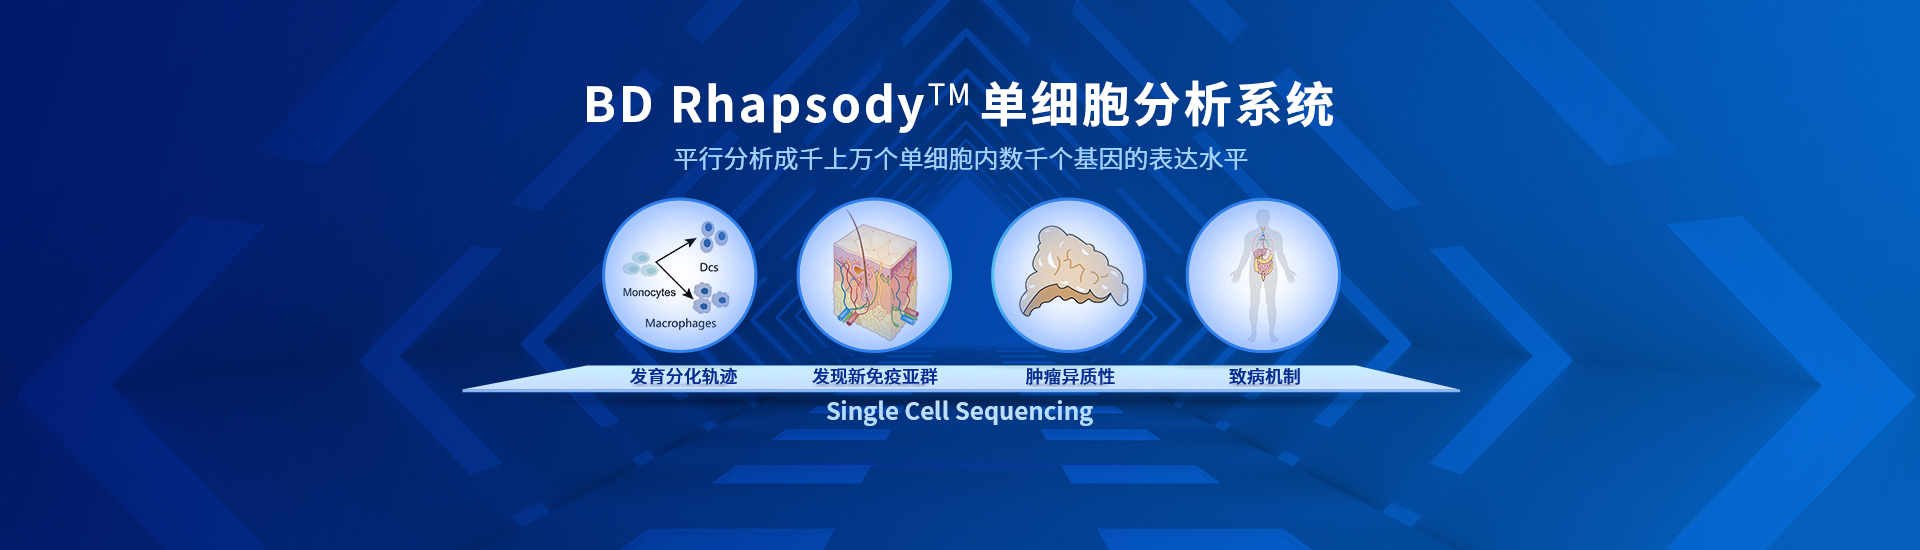 BD Rhapsody單細胞測序核心技術